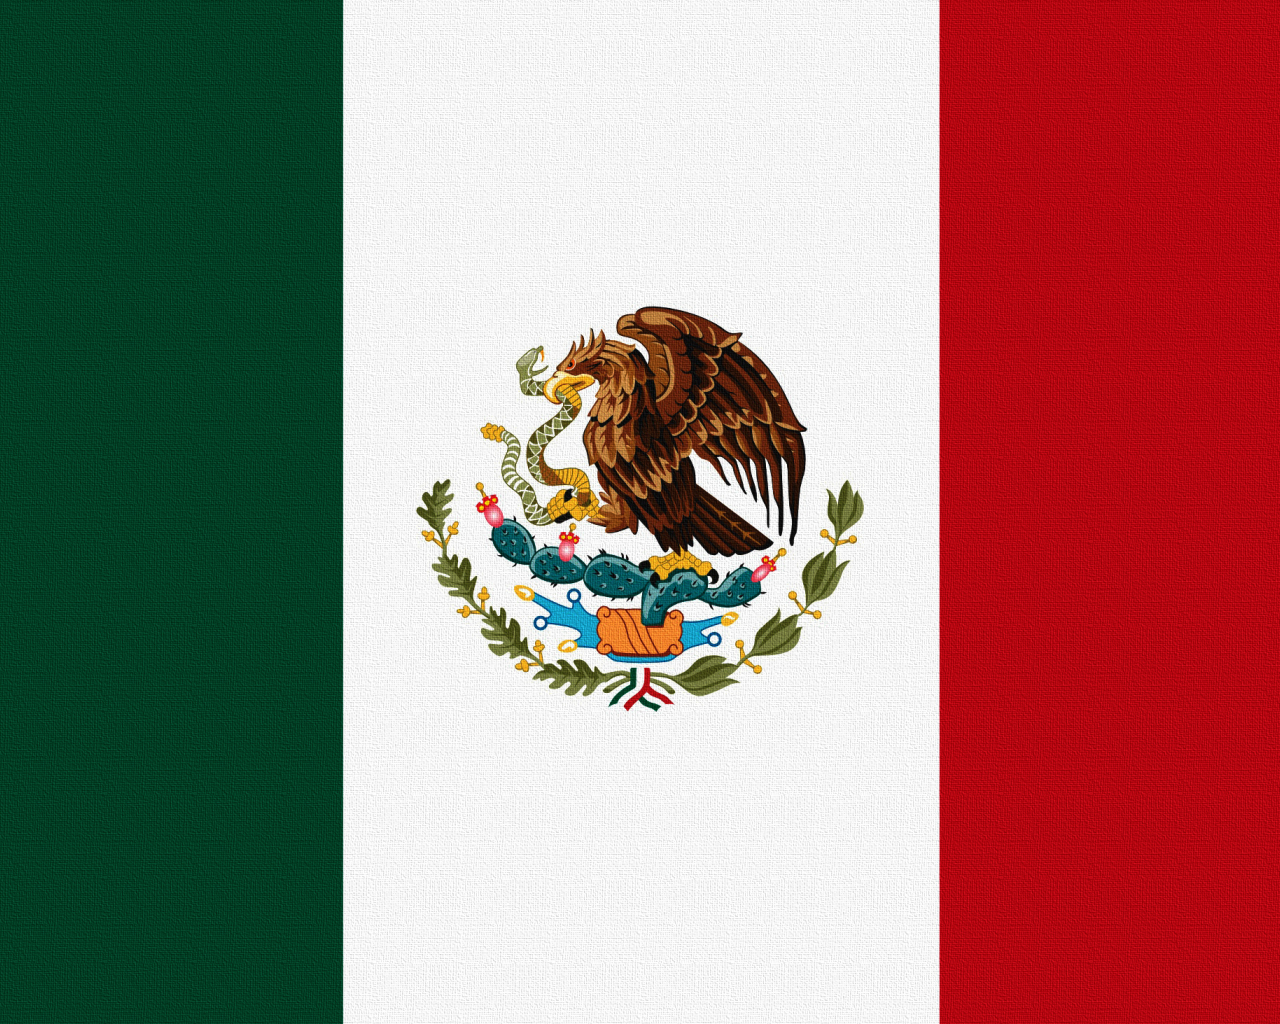 змея, флаг, мексика, орел, mexico